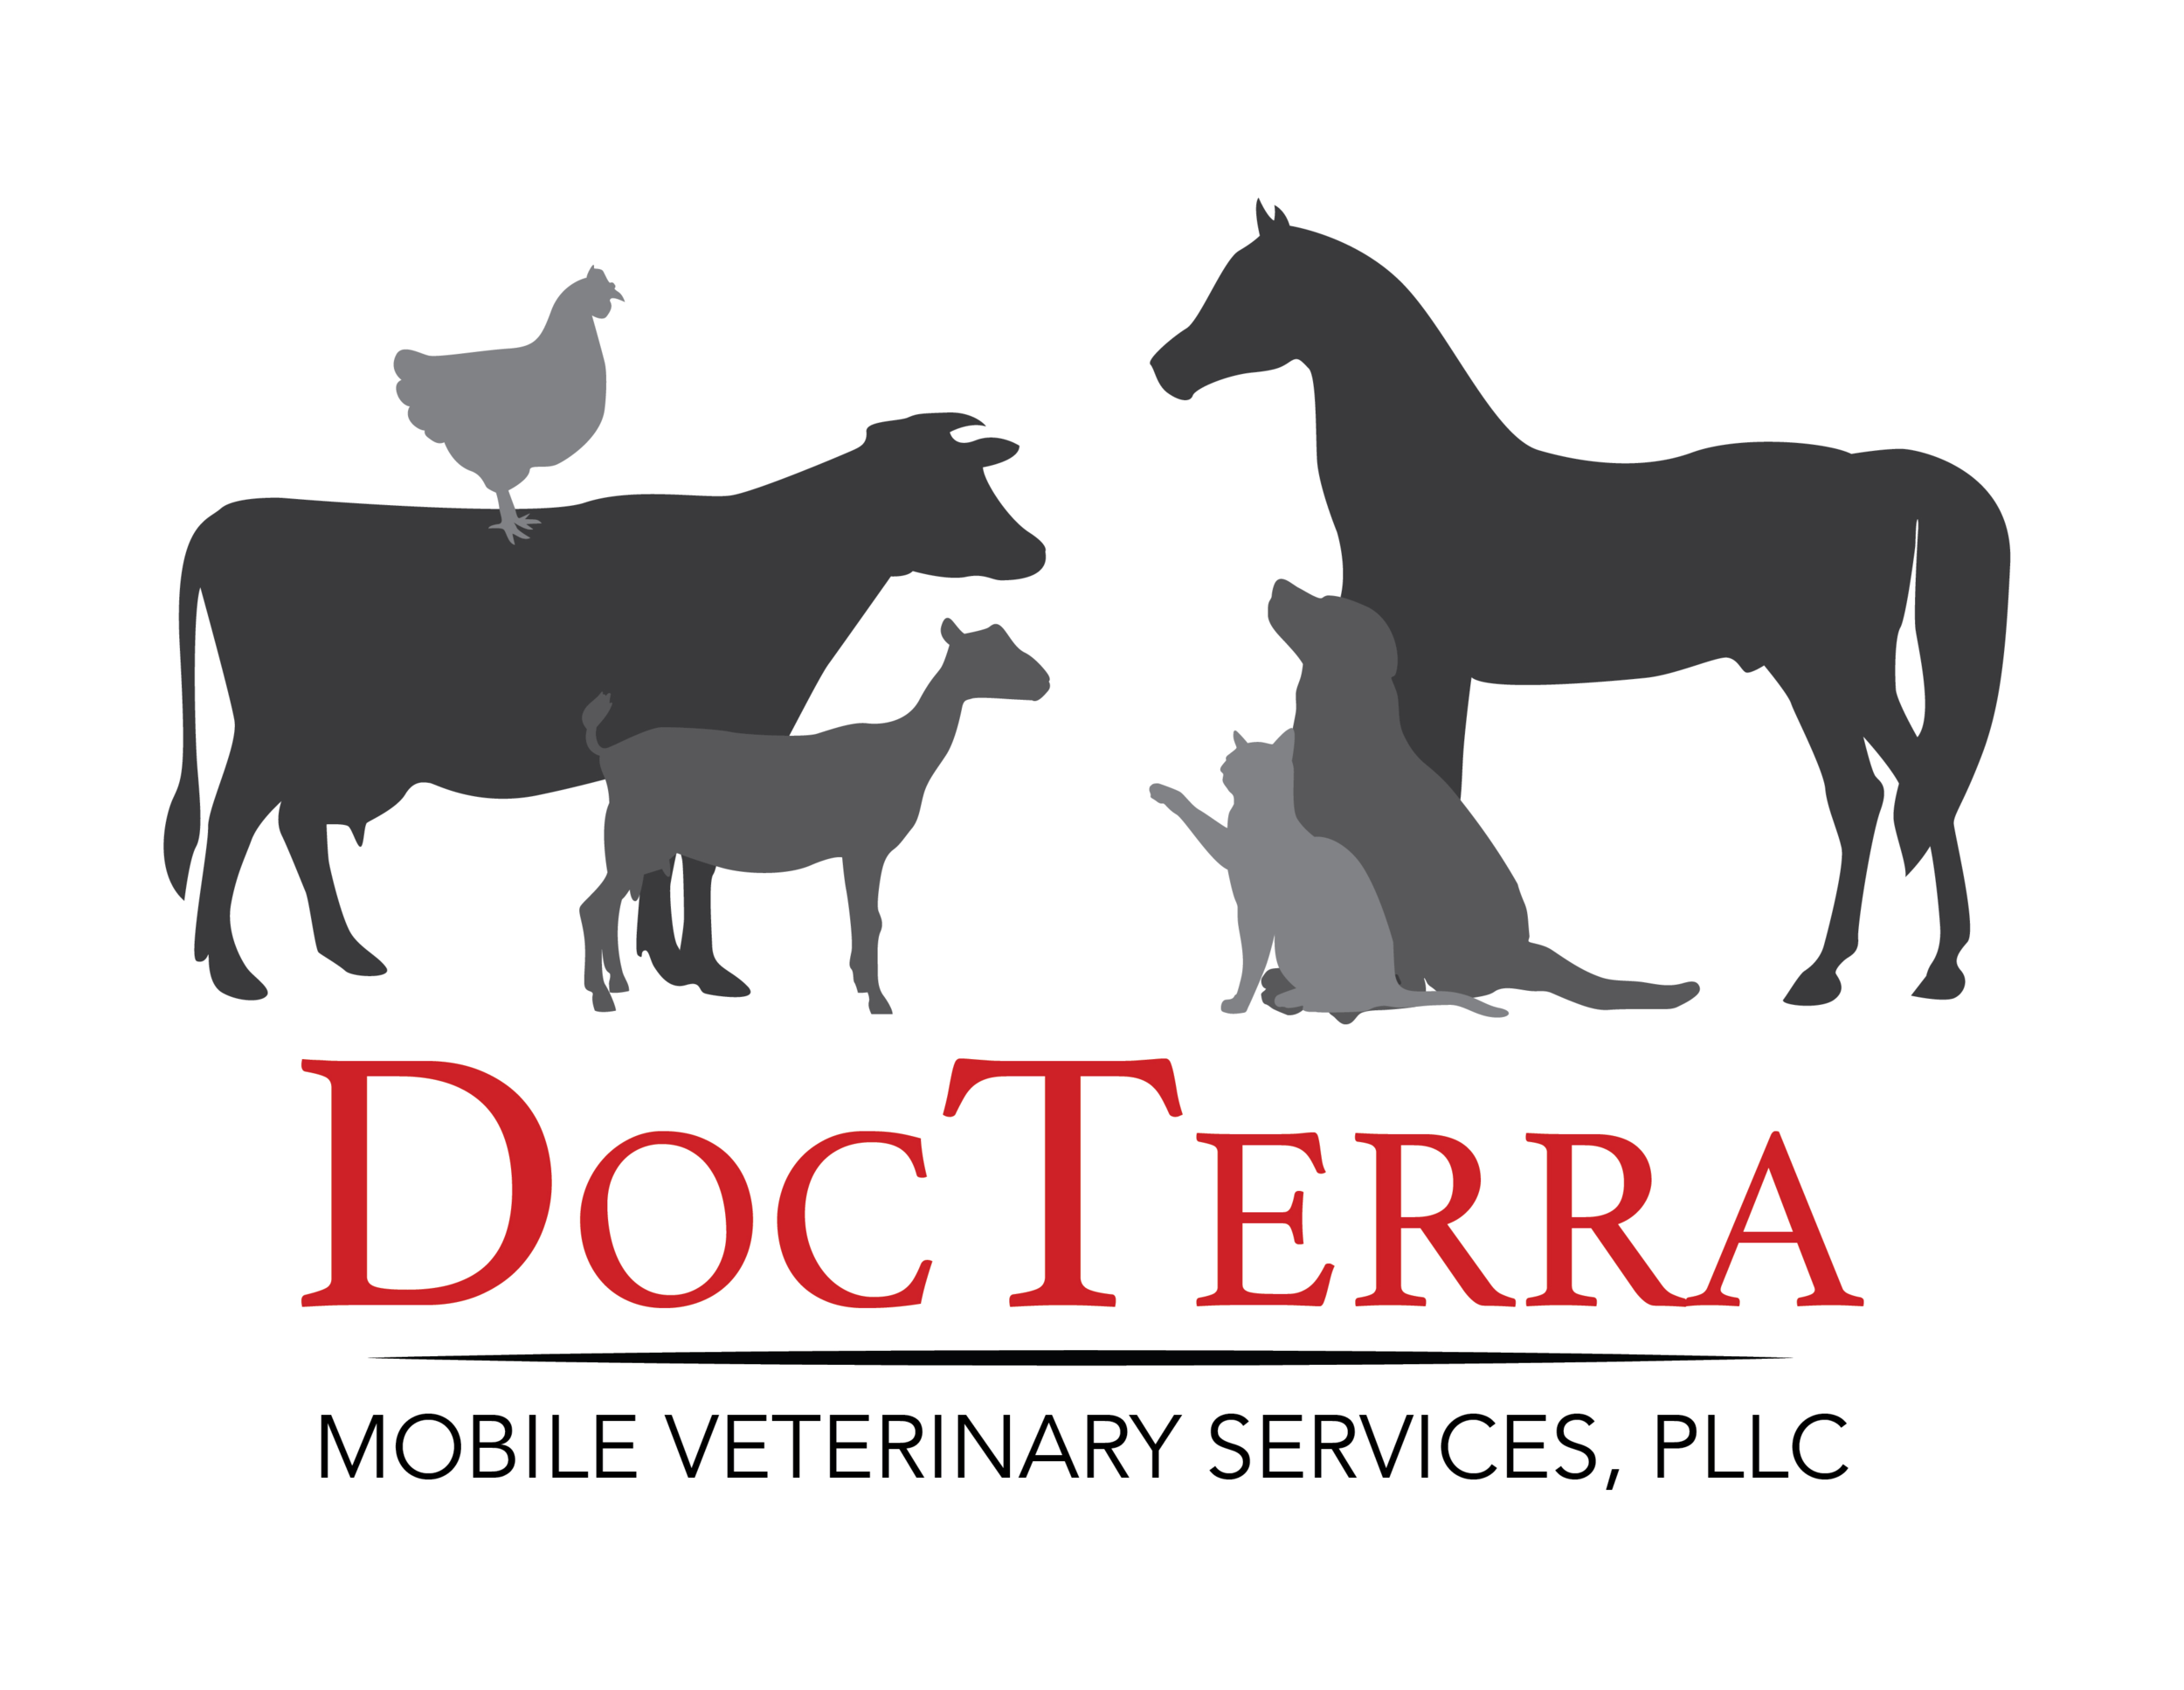 DocTerra Mobile Veterinary Services, PLLC